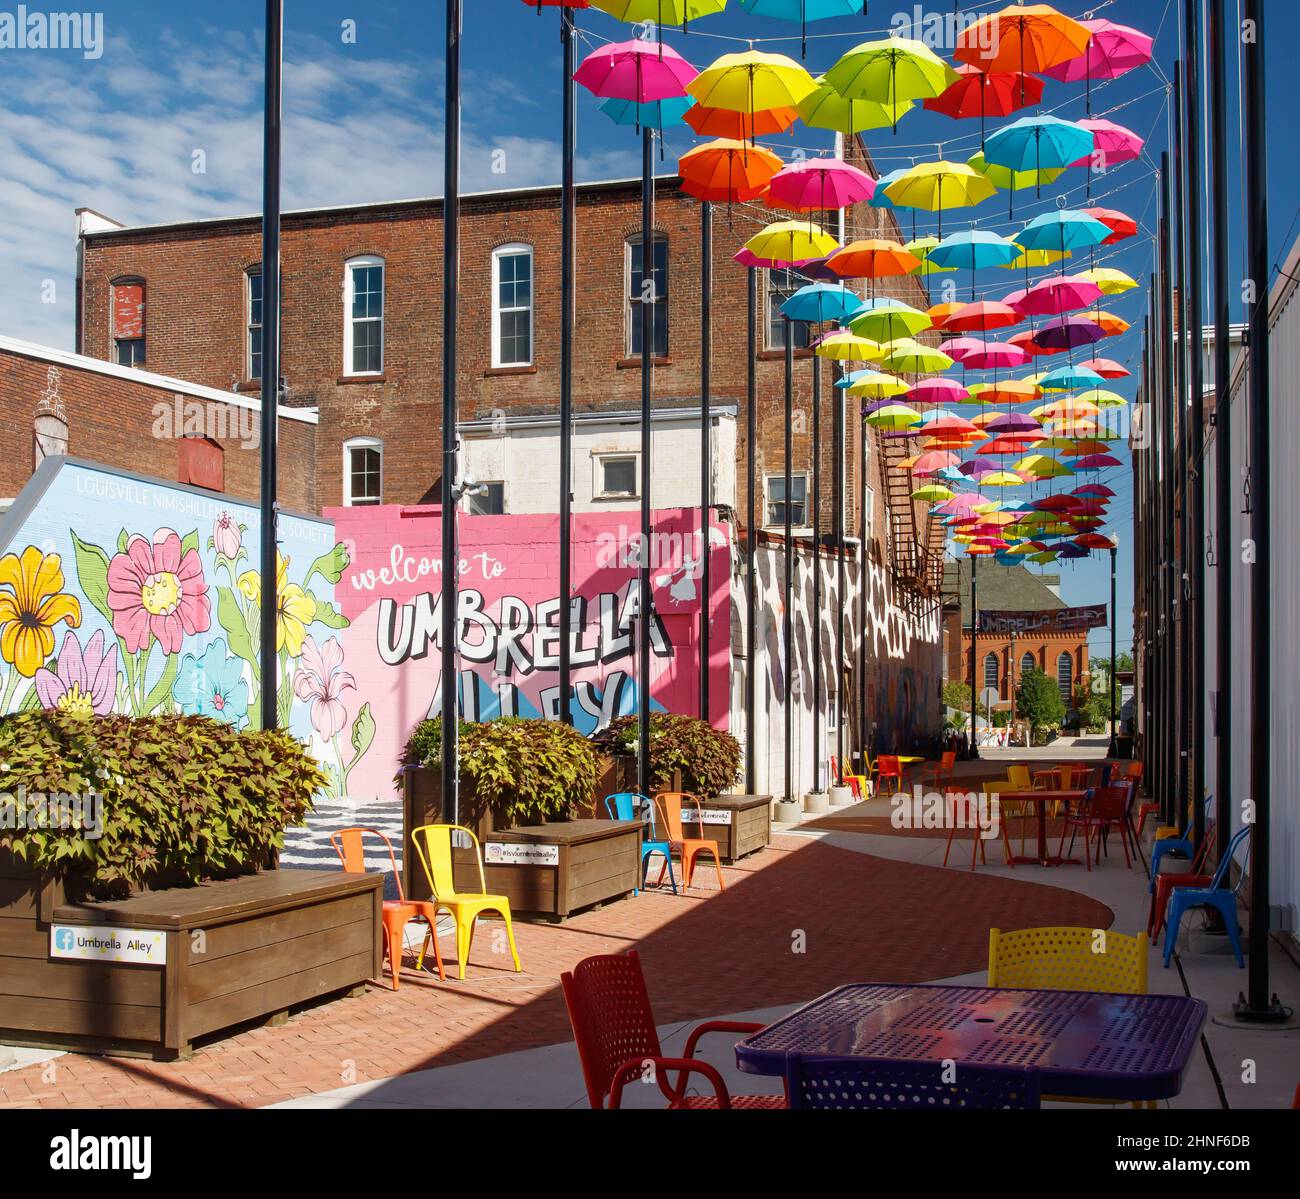 Umbrella Alley. A colorful artistic display of umbrellas hanging. Louisville, Ohio, USA. Stock Photo